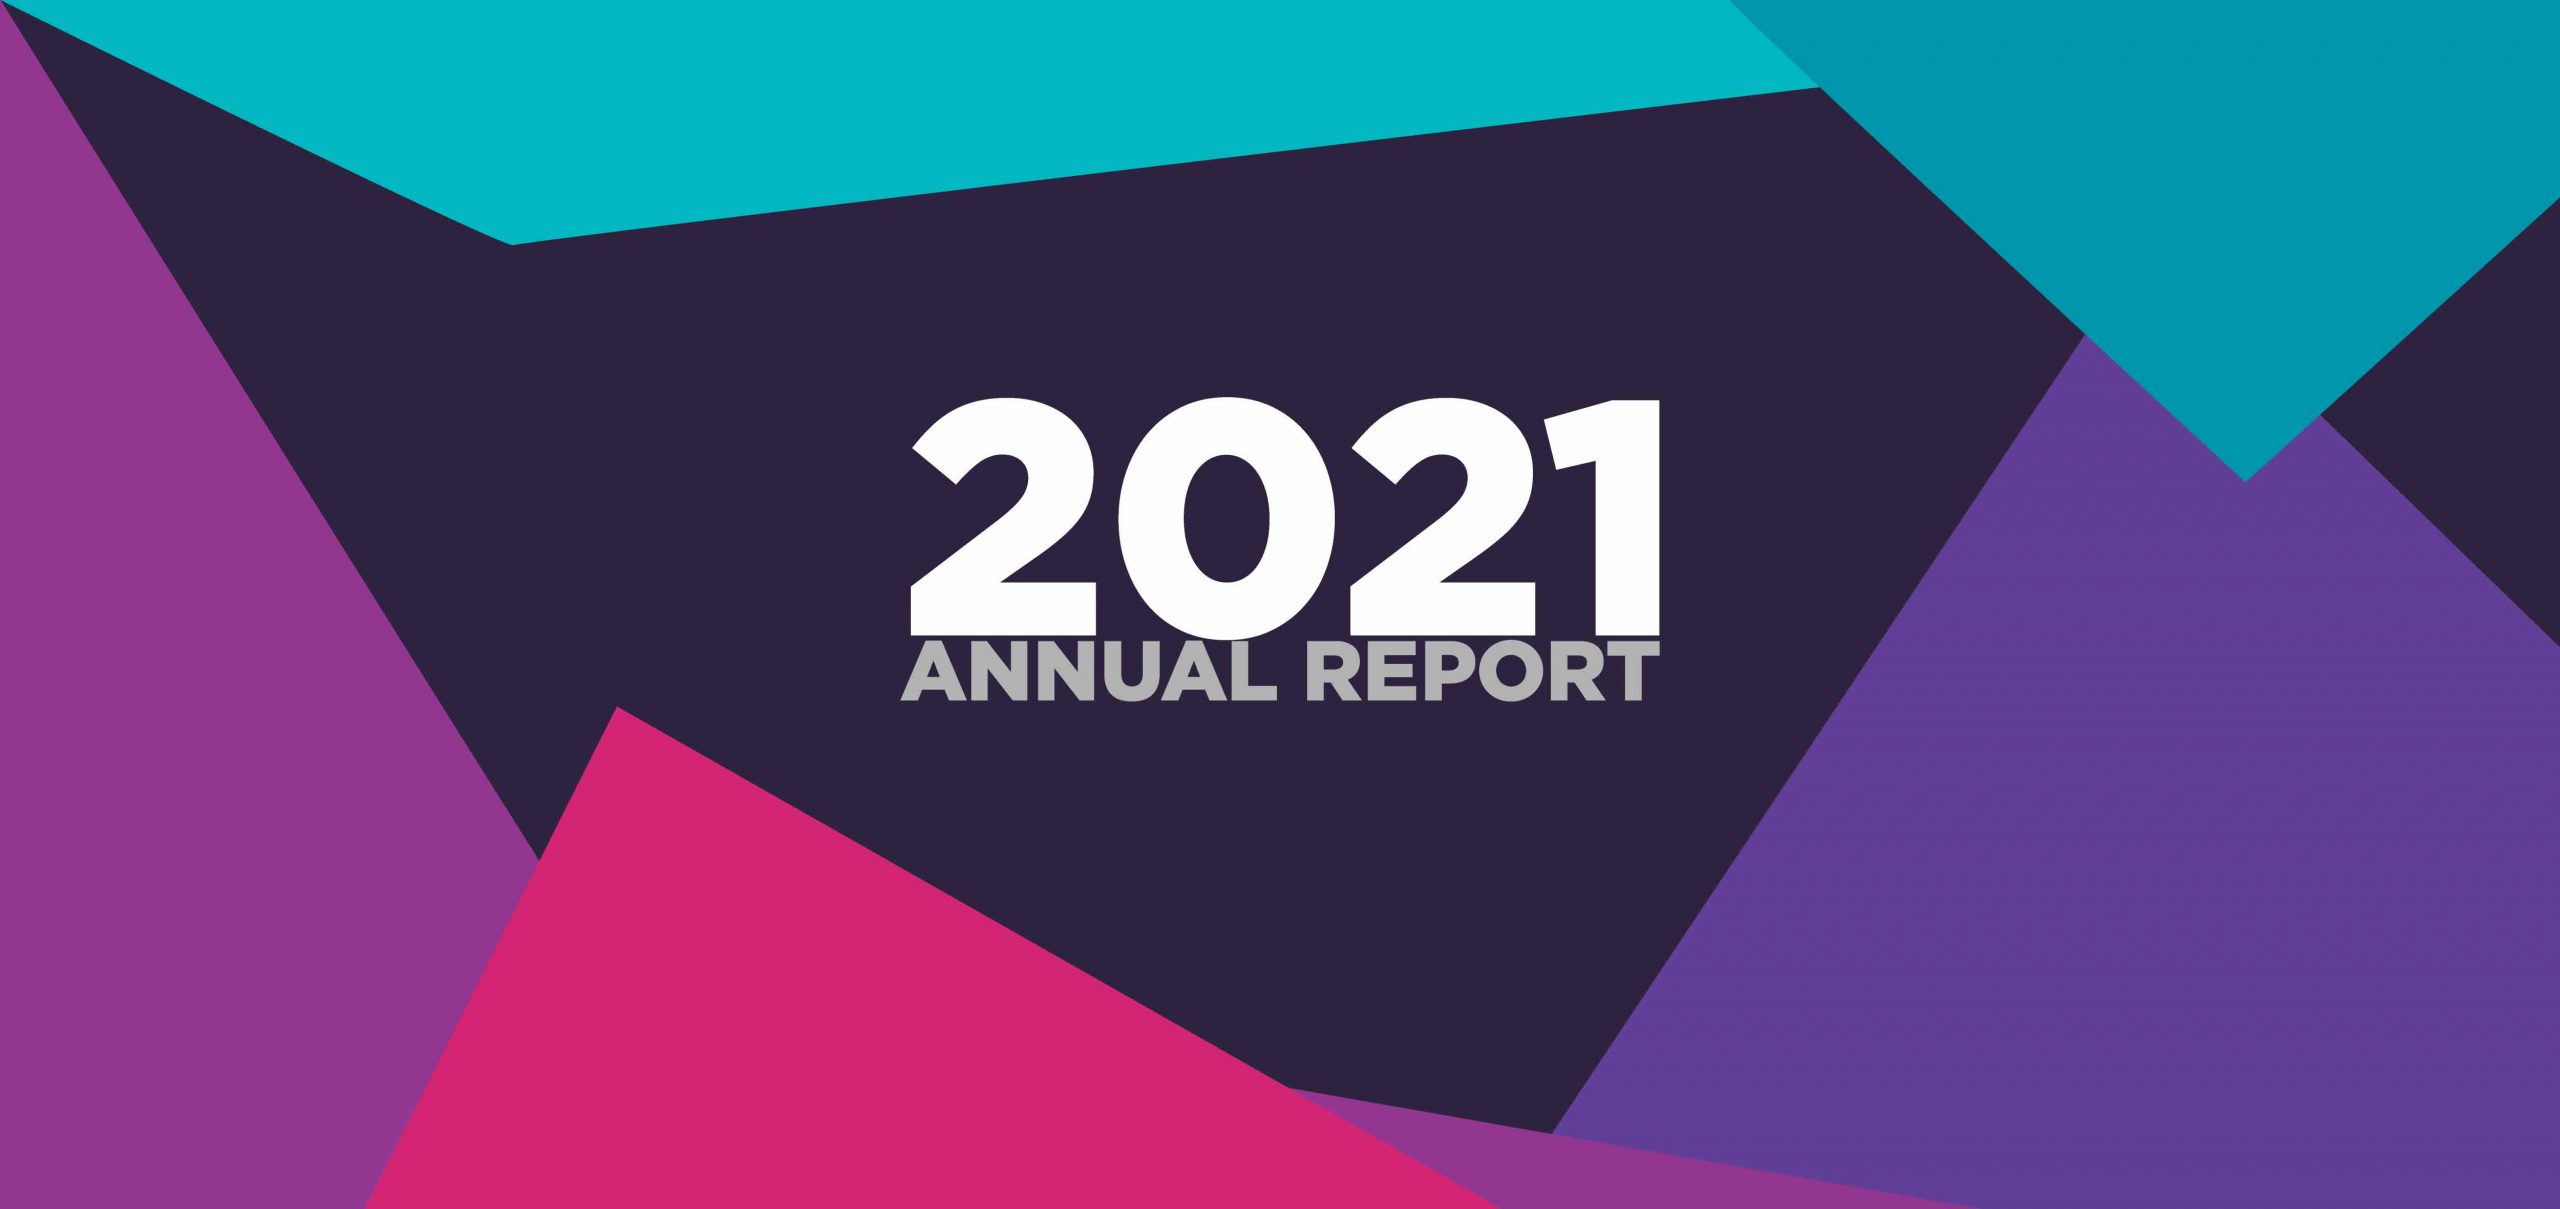 2021 Annual Report Slider